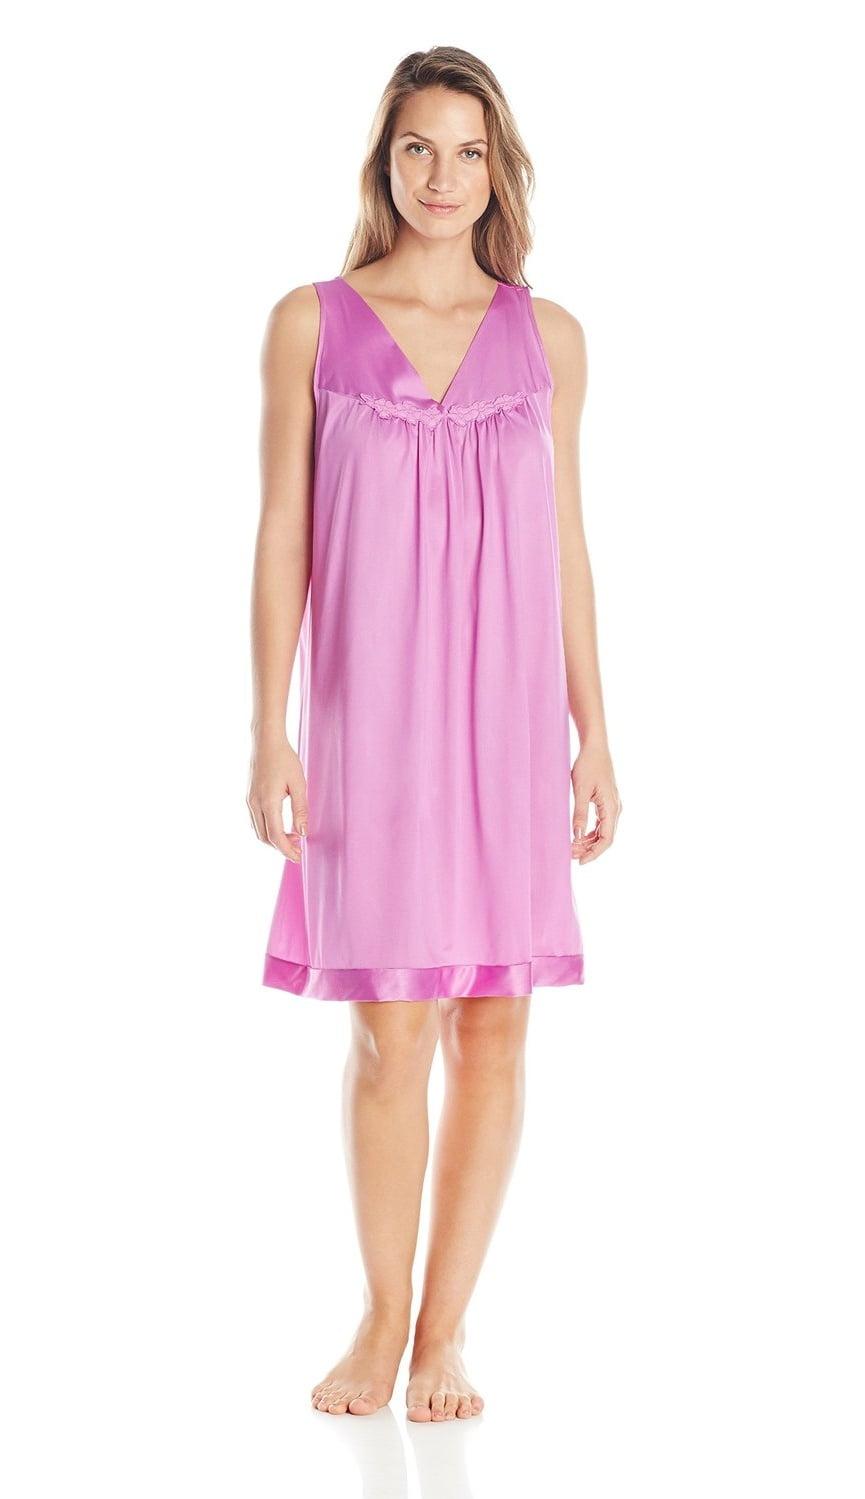 Vanity Fair Coloratura Women`s Short Nightgown, M, Impatient Pink ...